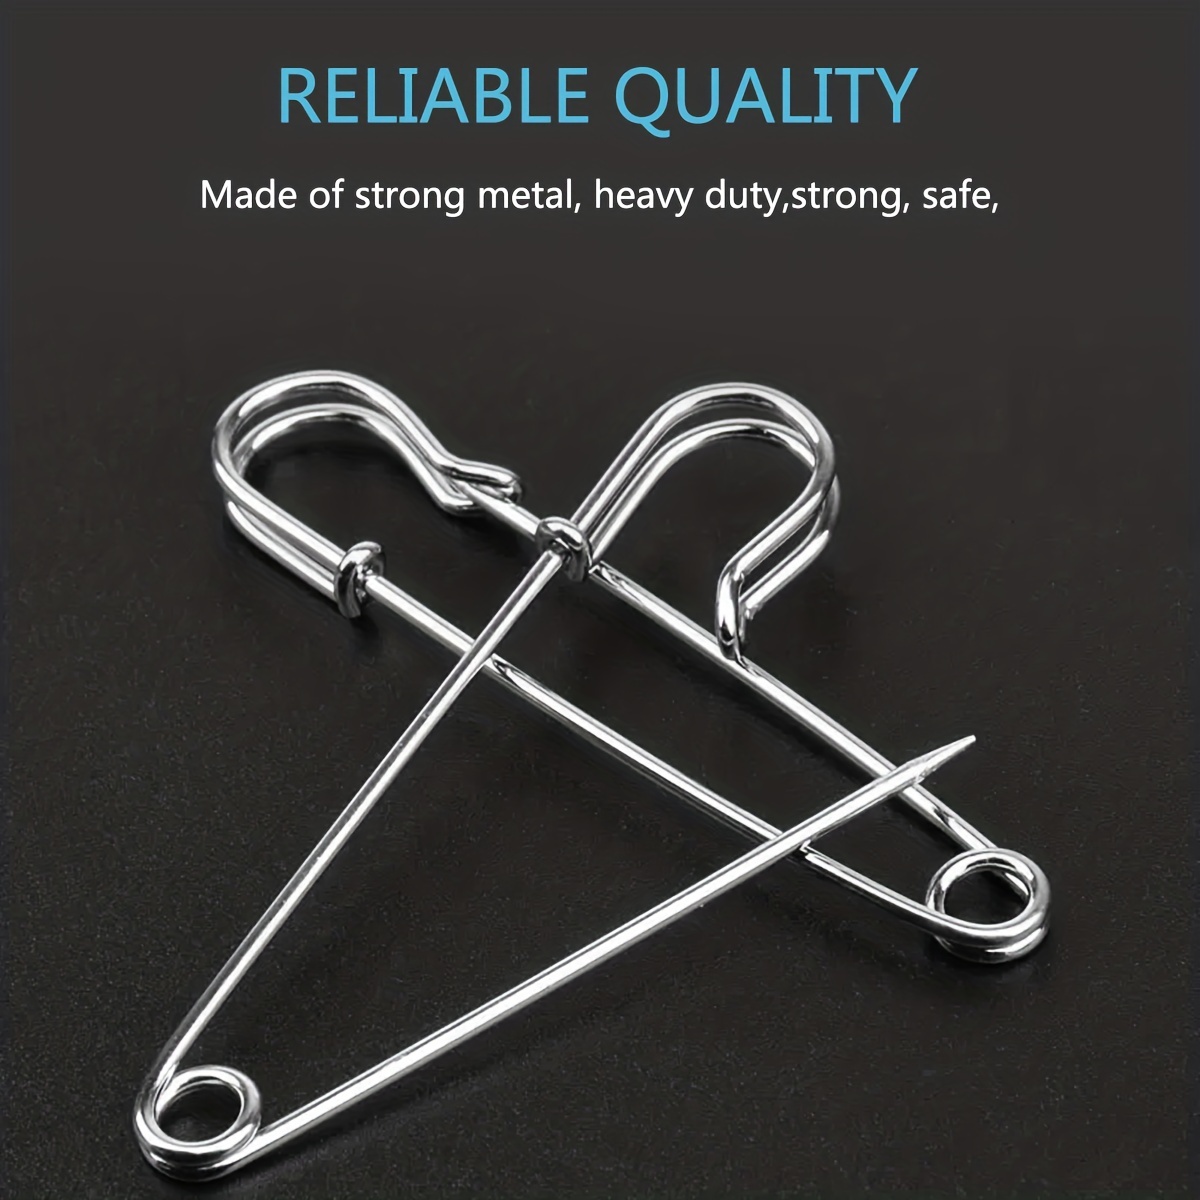 Metal Safety Pins Fastener Blanket Pins, Safety Pin Heavy Duty